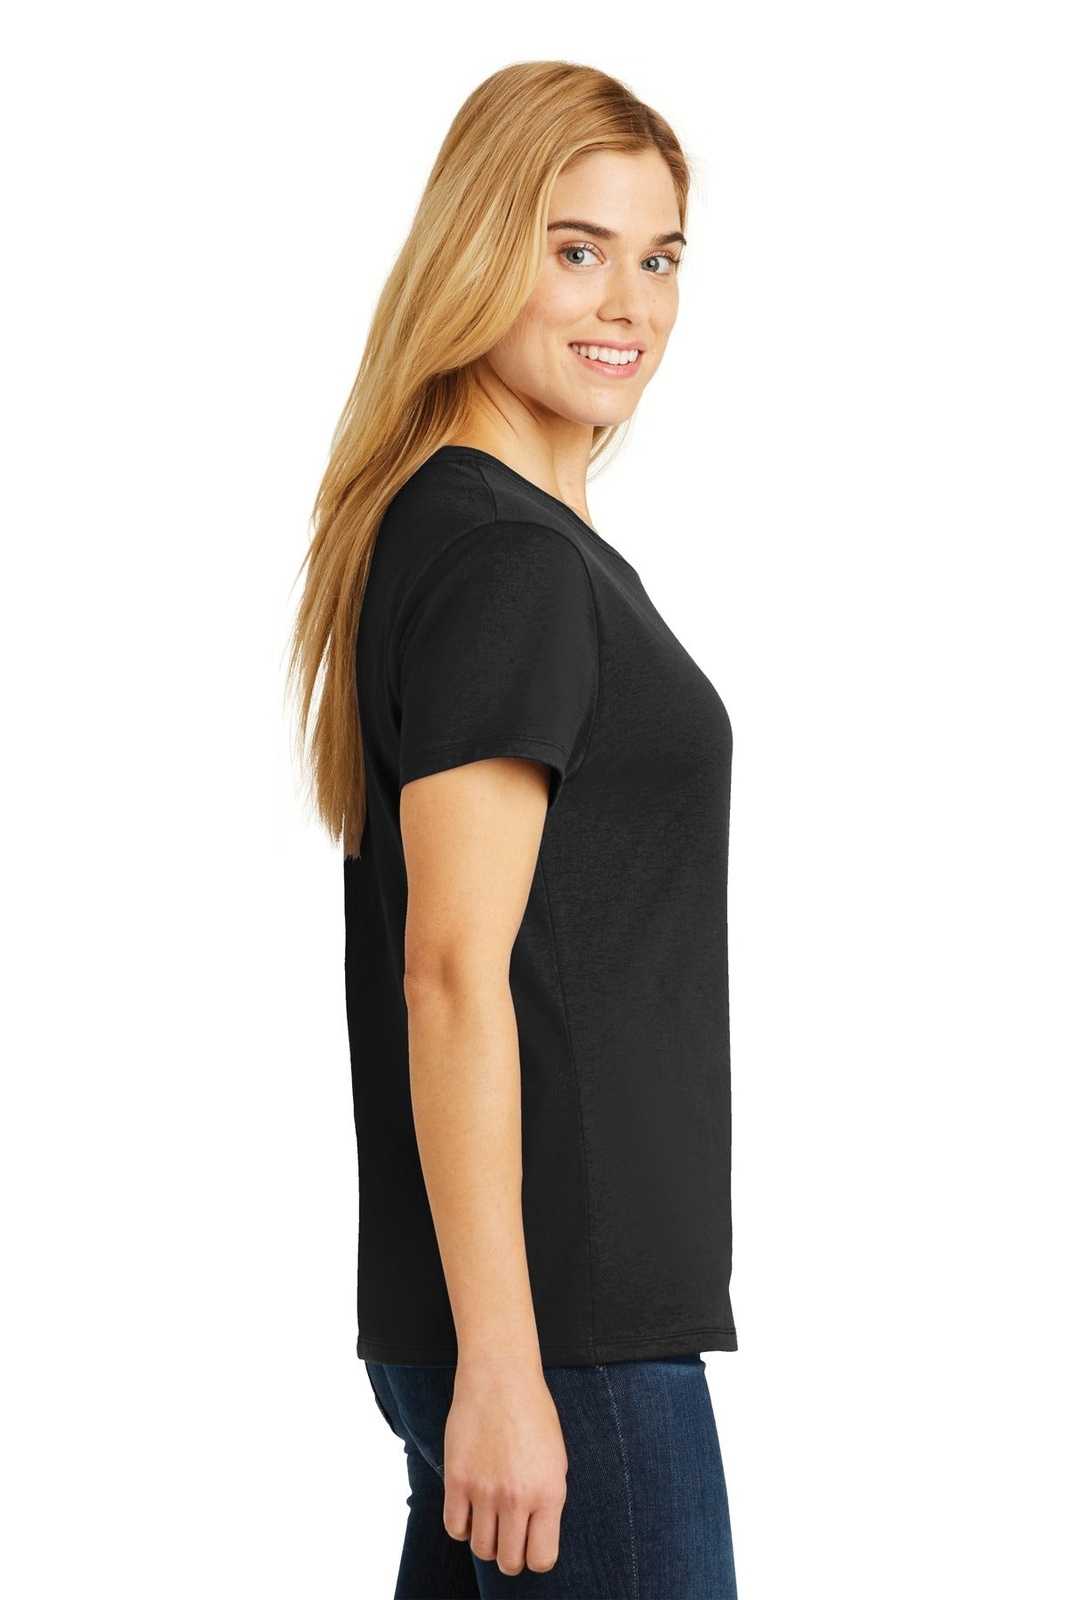 Hanes SL04 Ladies Nano-T Cotton T-Shirt - Black - HIT a Double